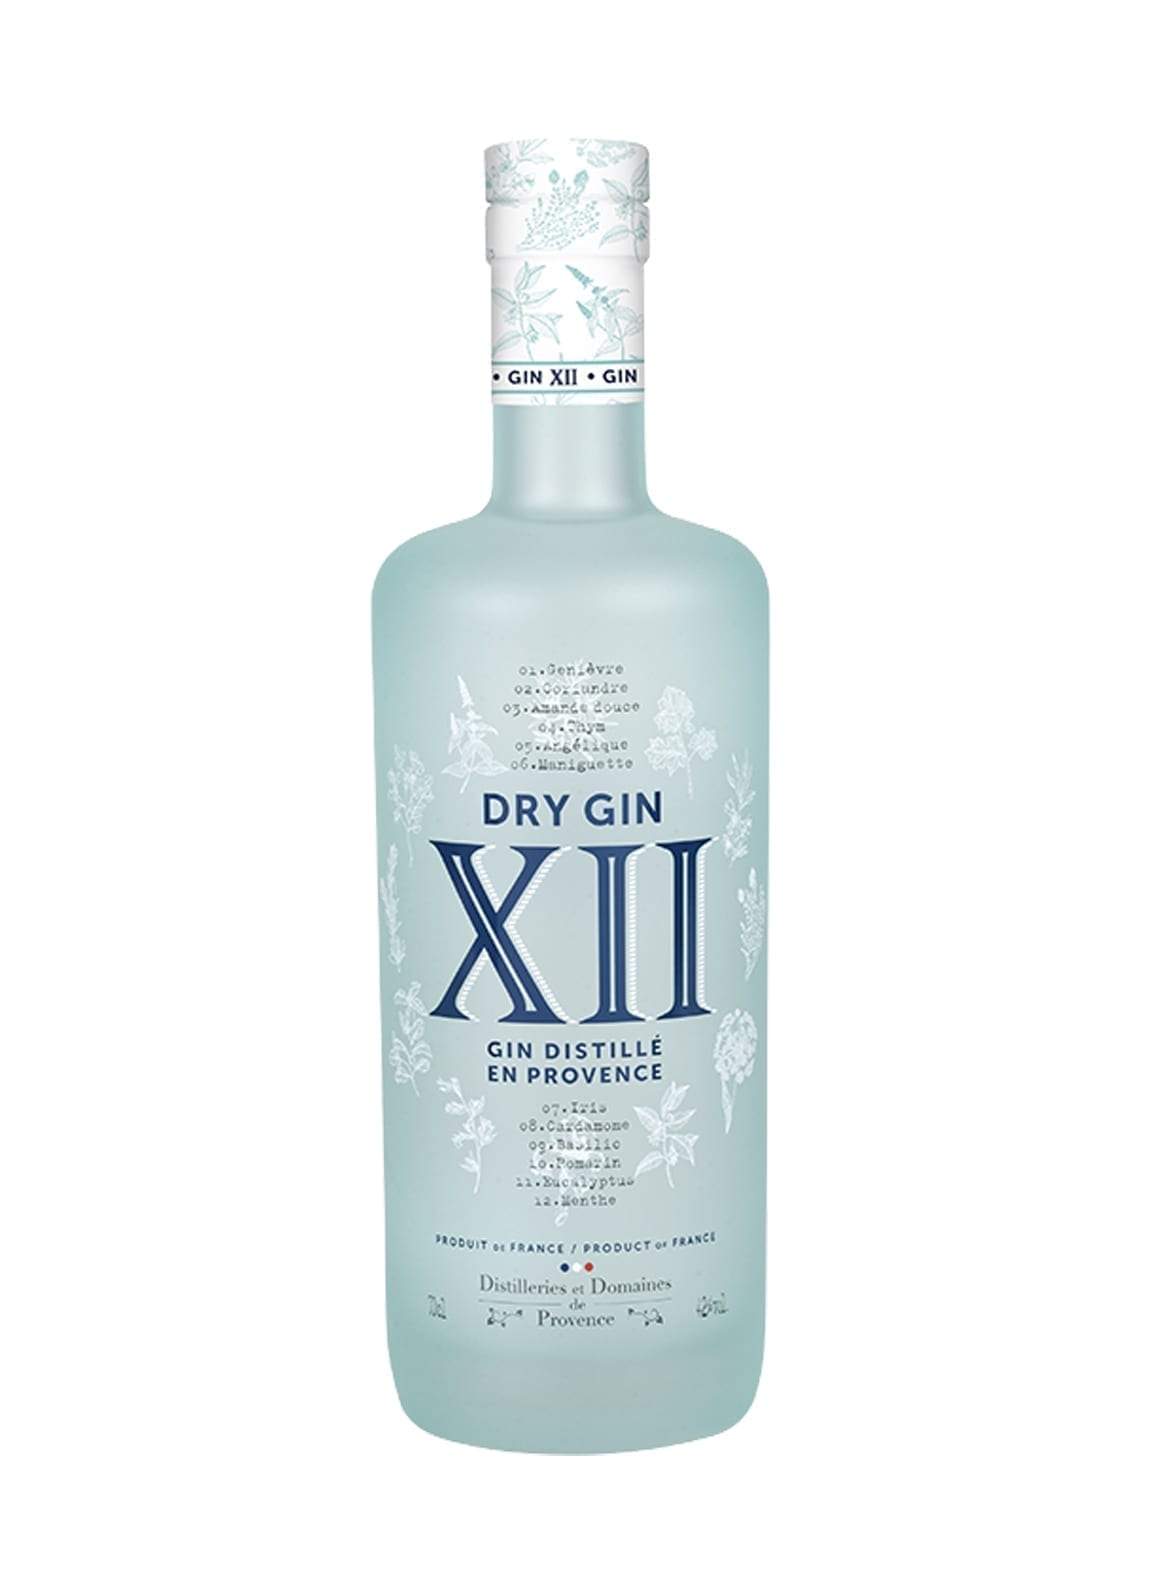 Distilleries et Domaines de Provence XII Dry Gin 42% 700ml | Liqueurs | Shop online at Spirits of France